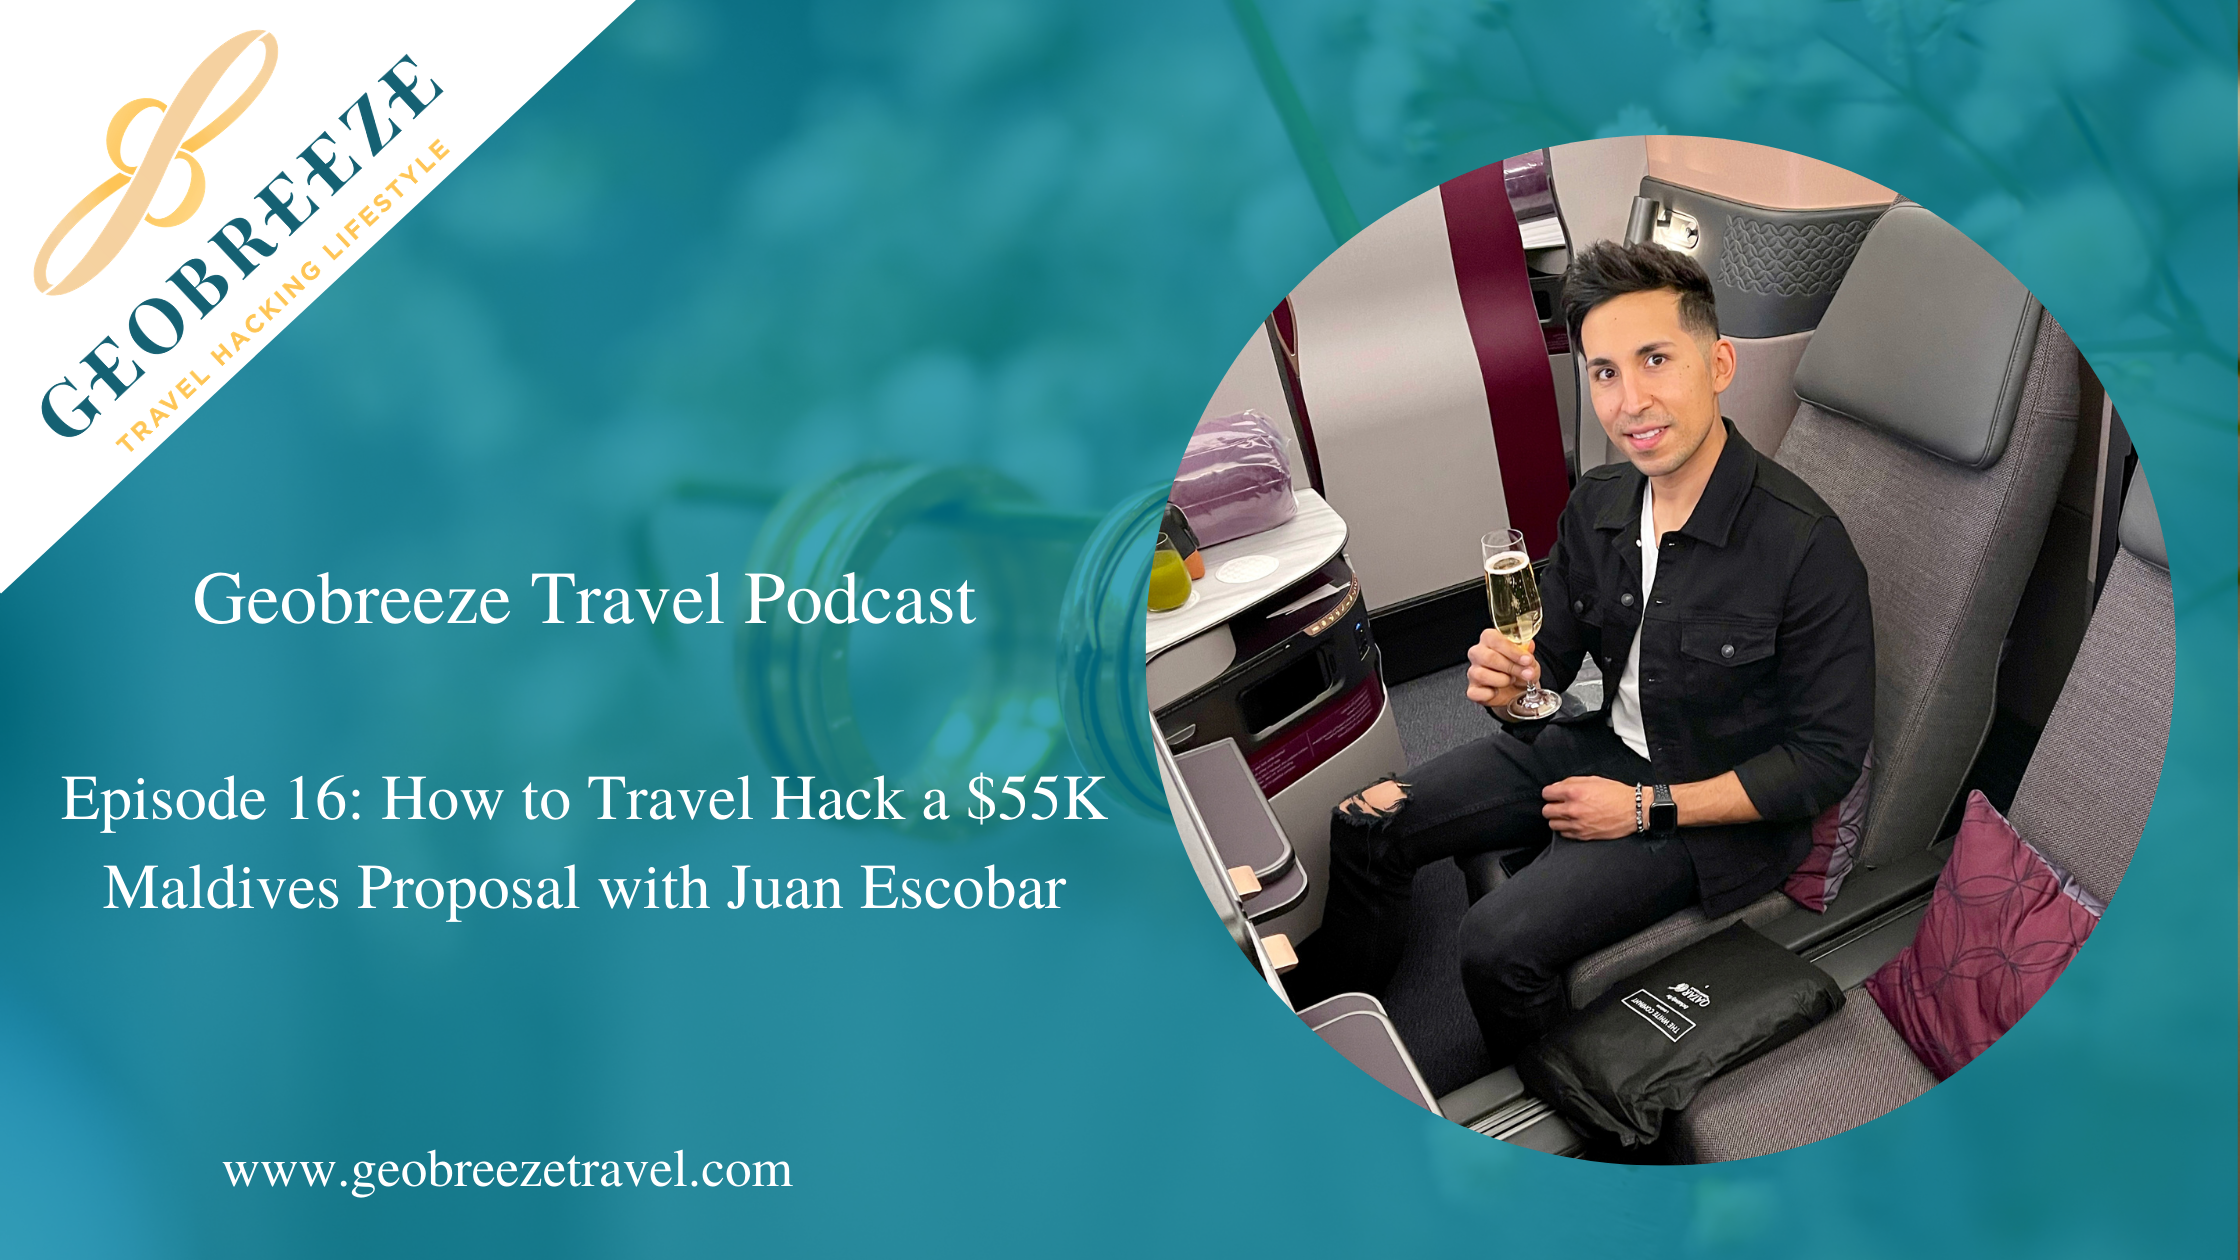 Episode 16: How to Travel Hack a $55K Maldives Proposal with Juan Escobar